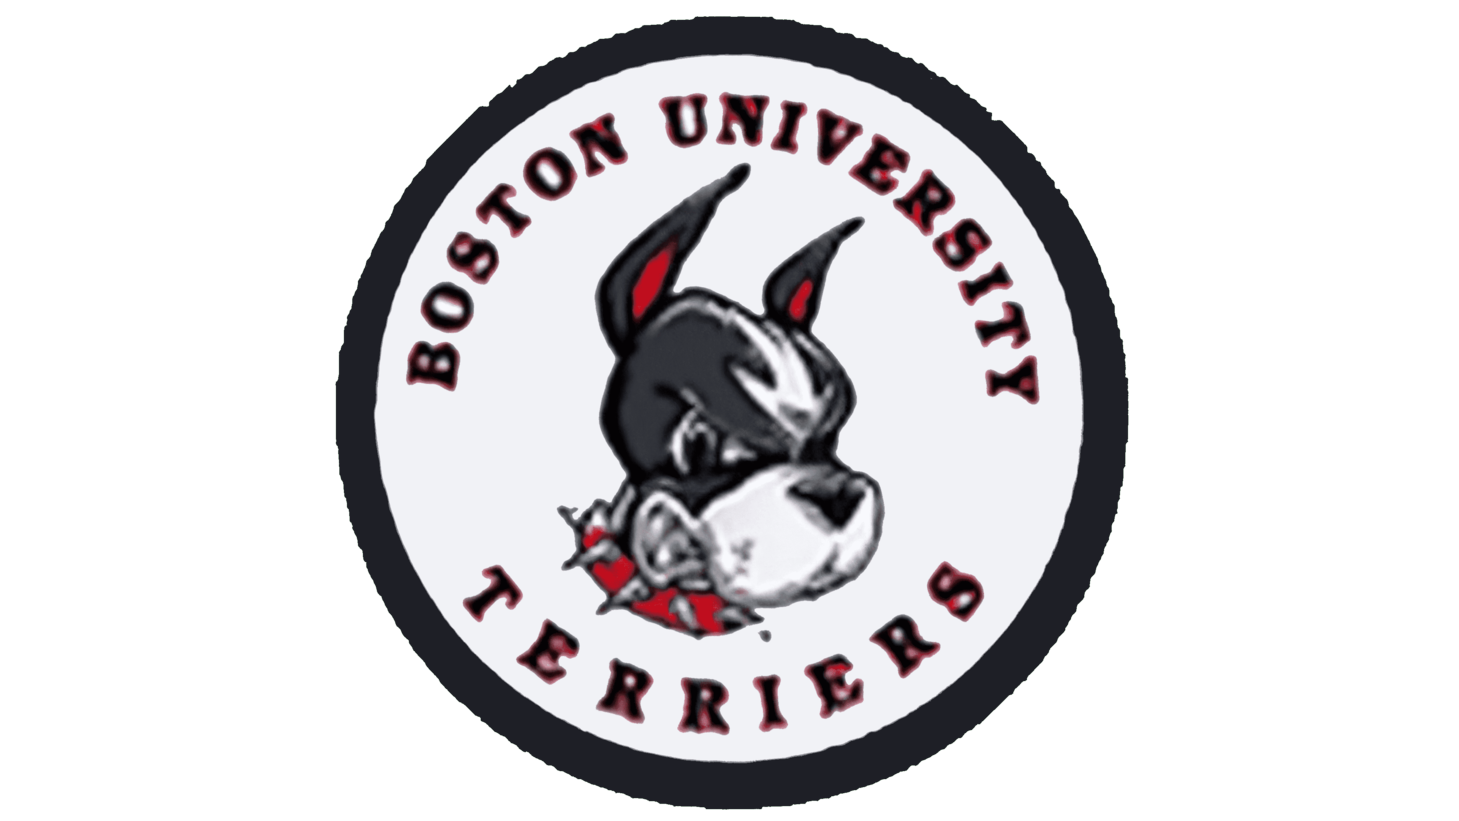 Boston university terriers sign 1980